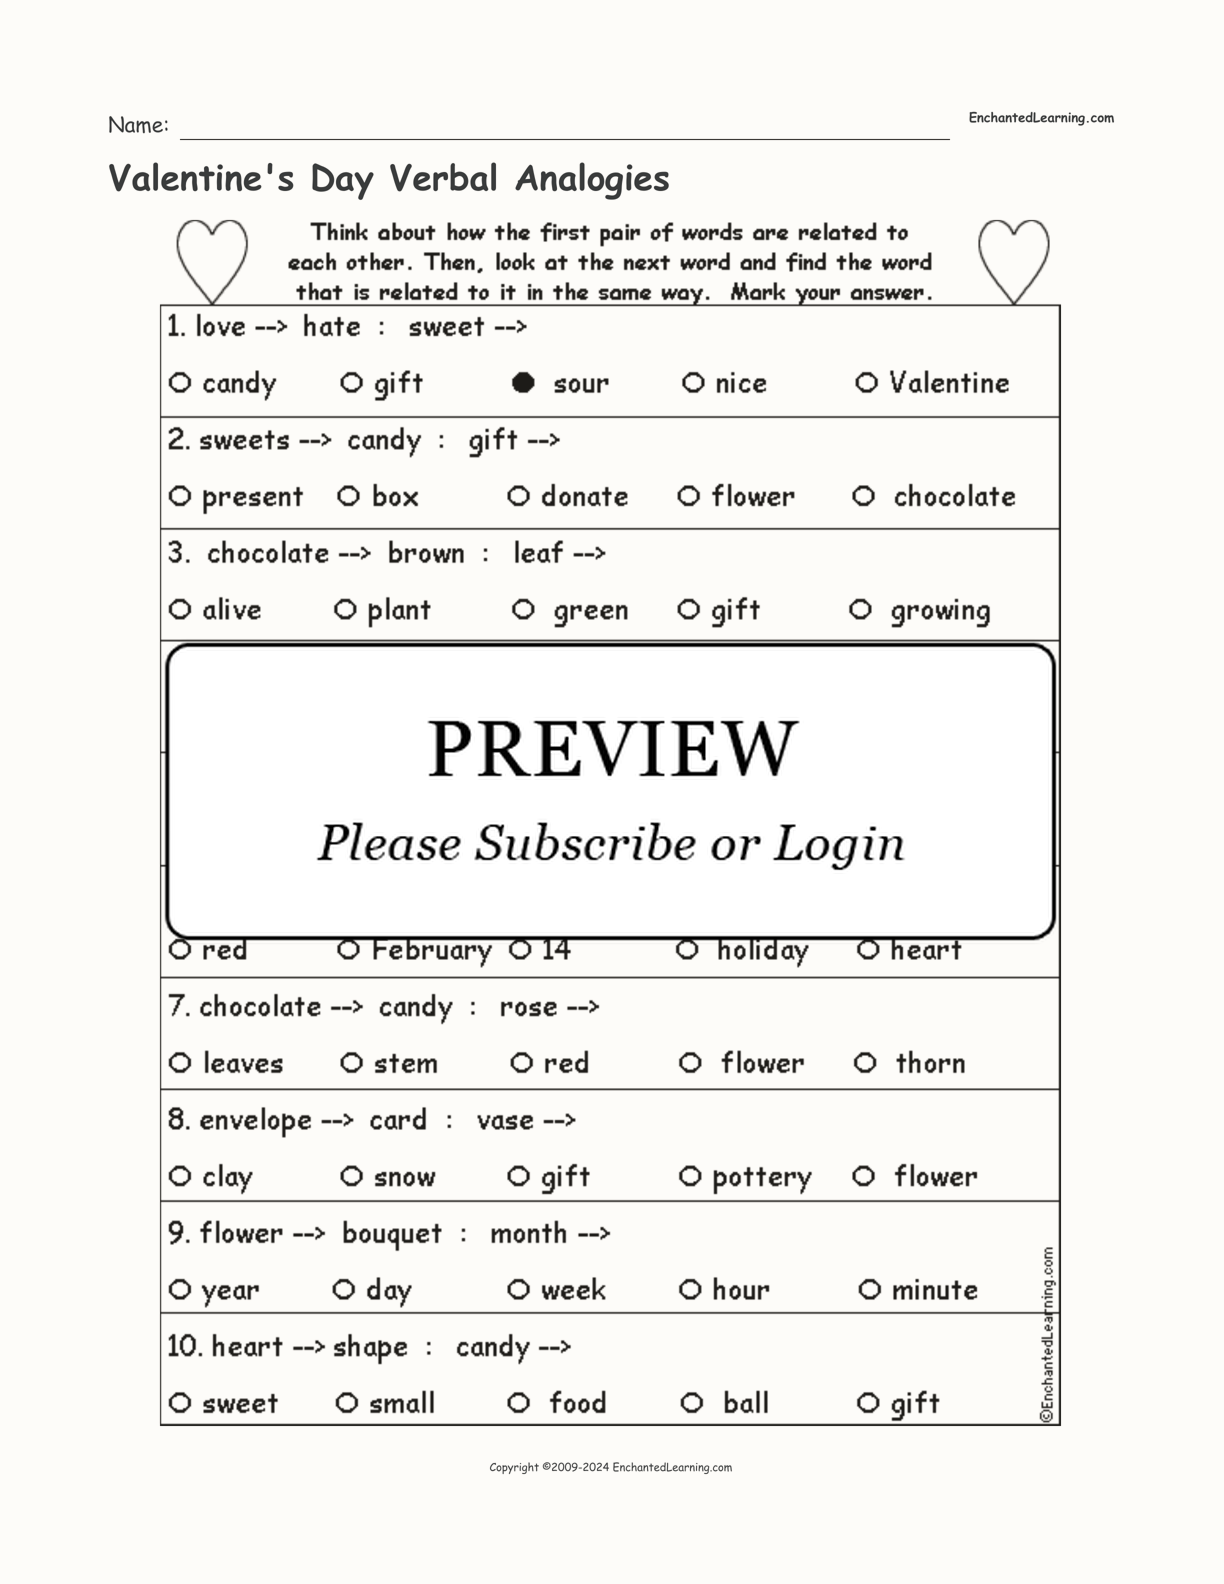 Valentine's Day Verbal Analogies interactive worksheet page 1